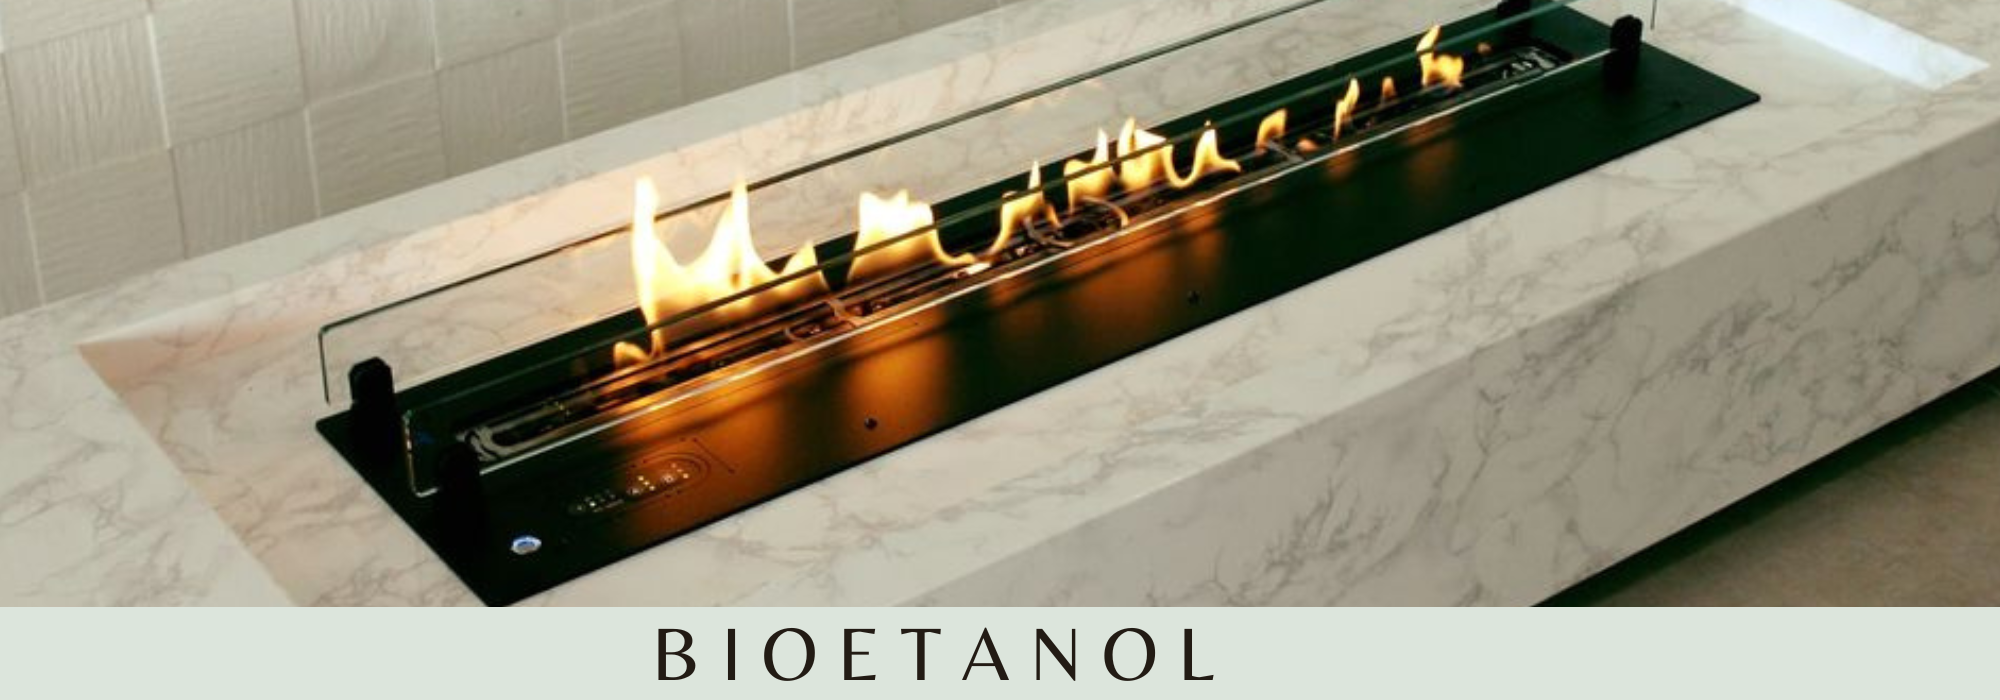 Equipamentos a Bioetanol Biojaq